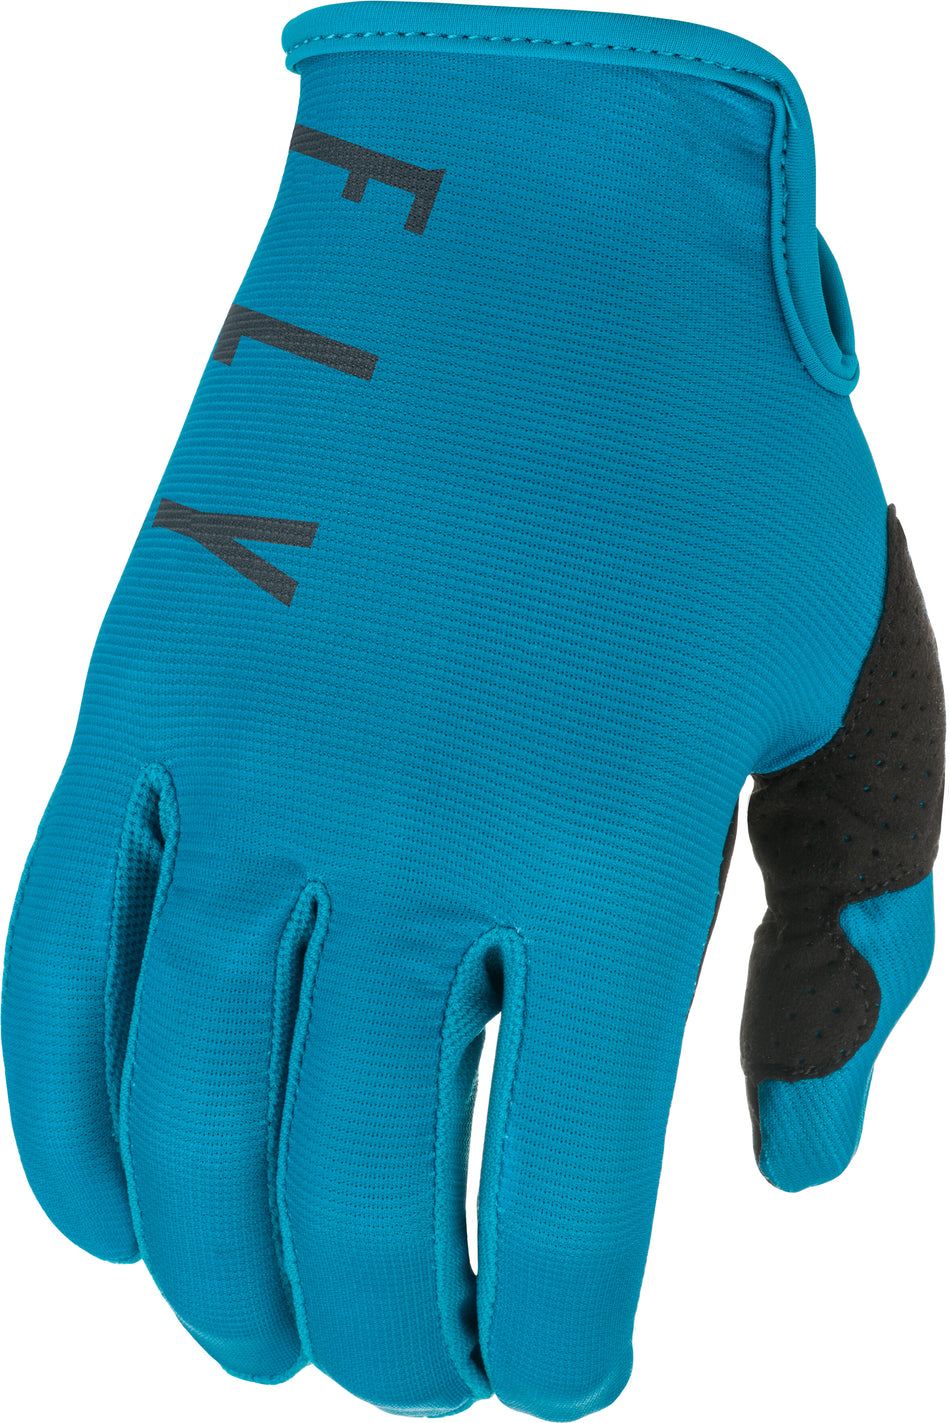 FLY RACING Lite Gloves Blue/Grey Sz 13 374-71113